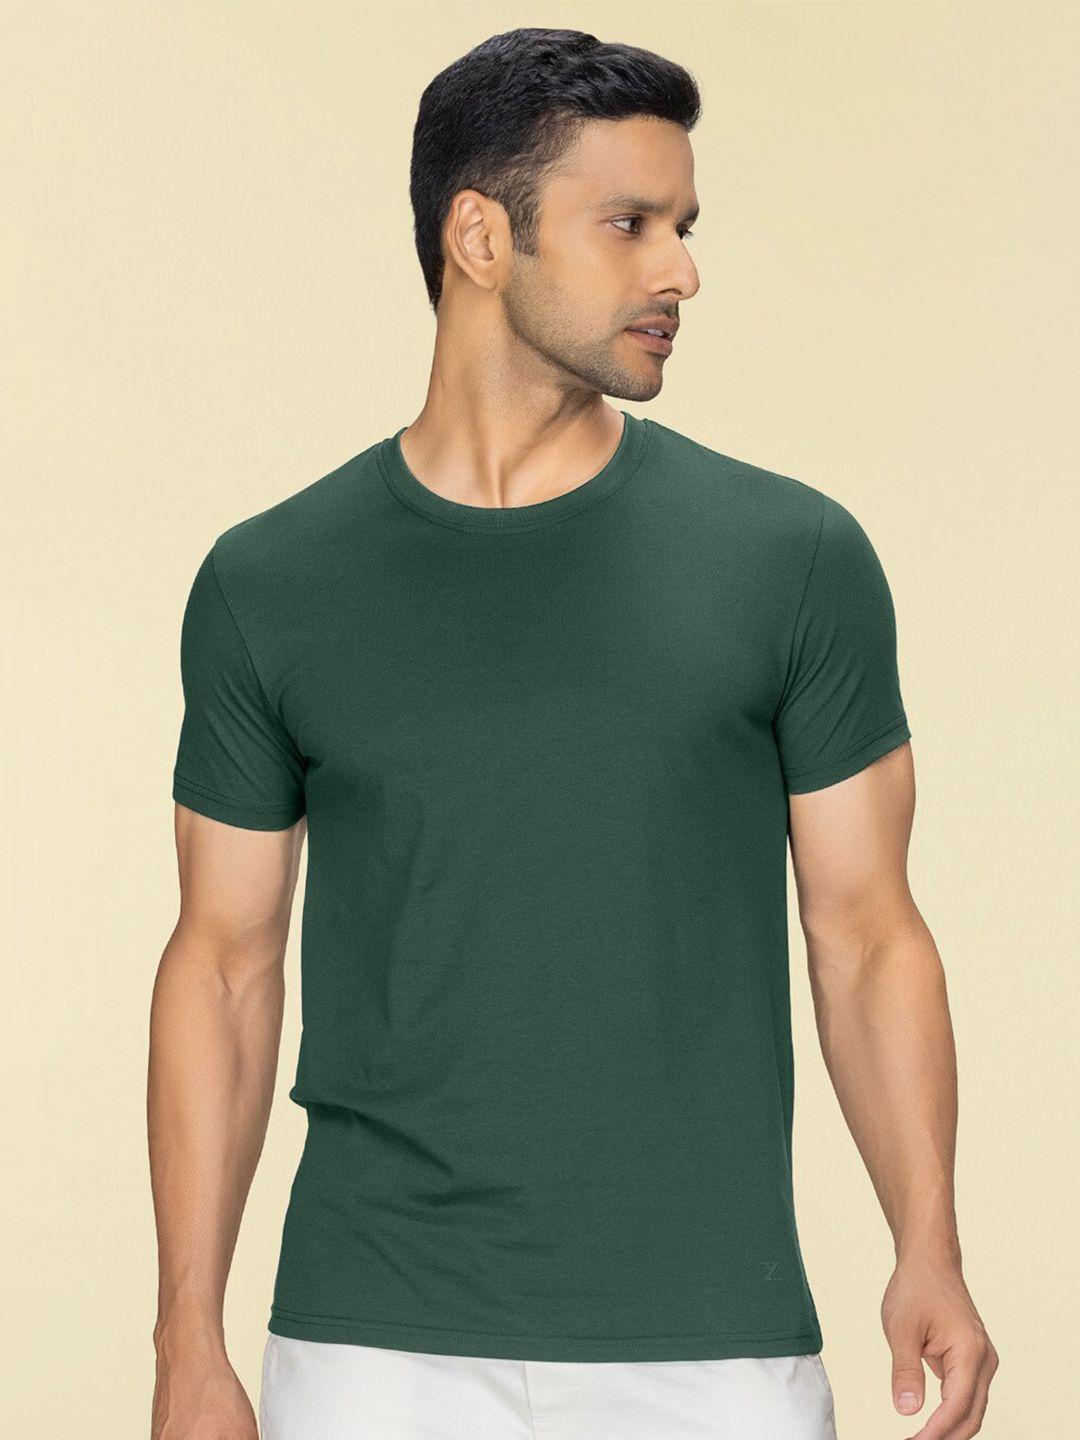 xyxx-round-neck-pure-cotton-t-shirt